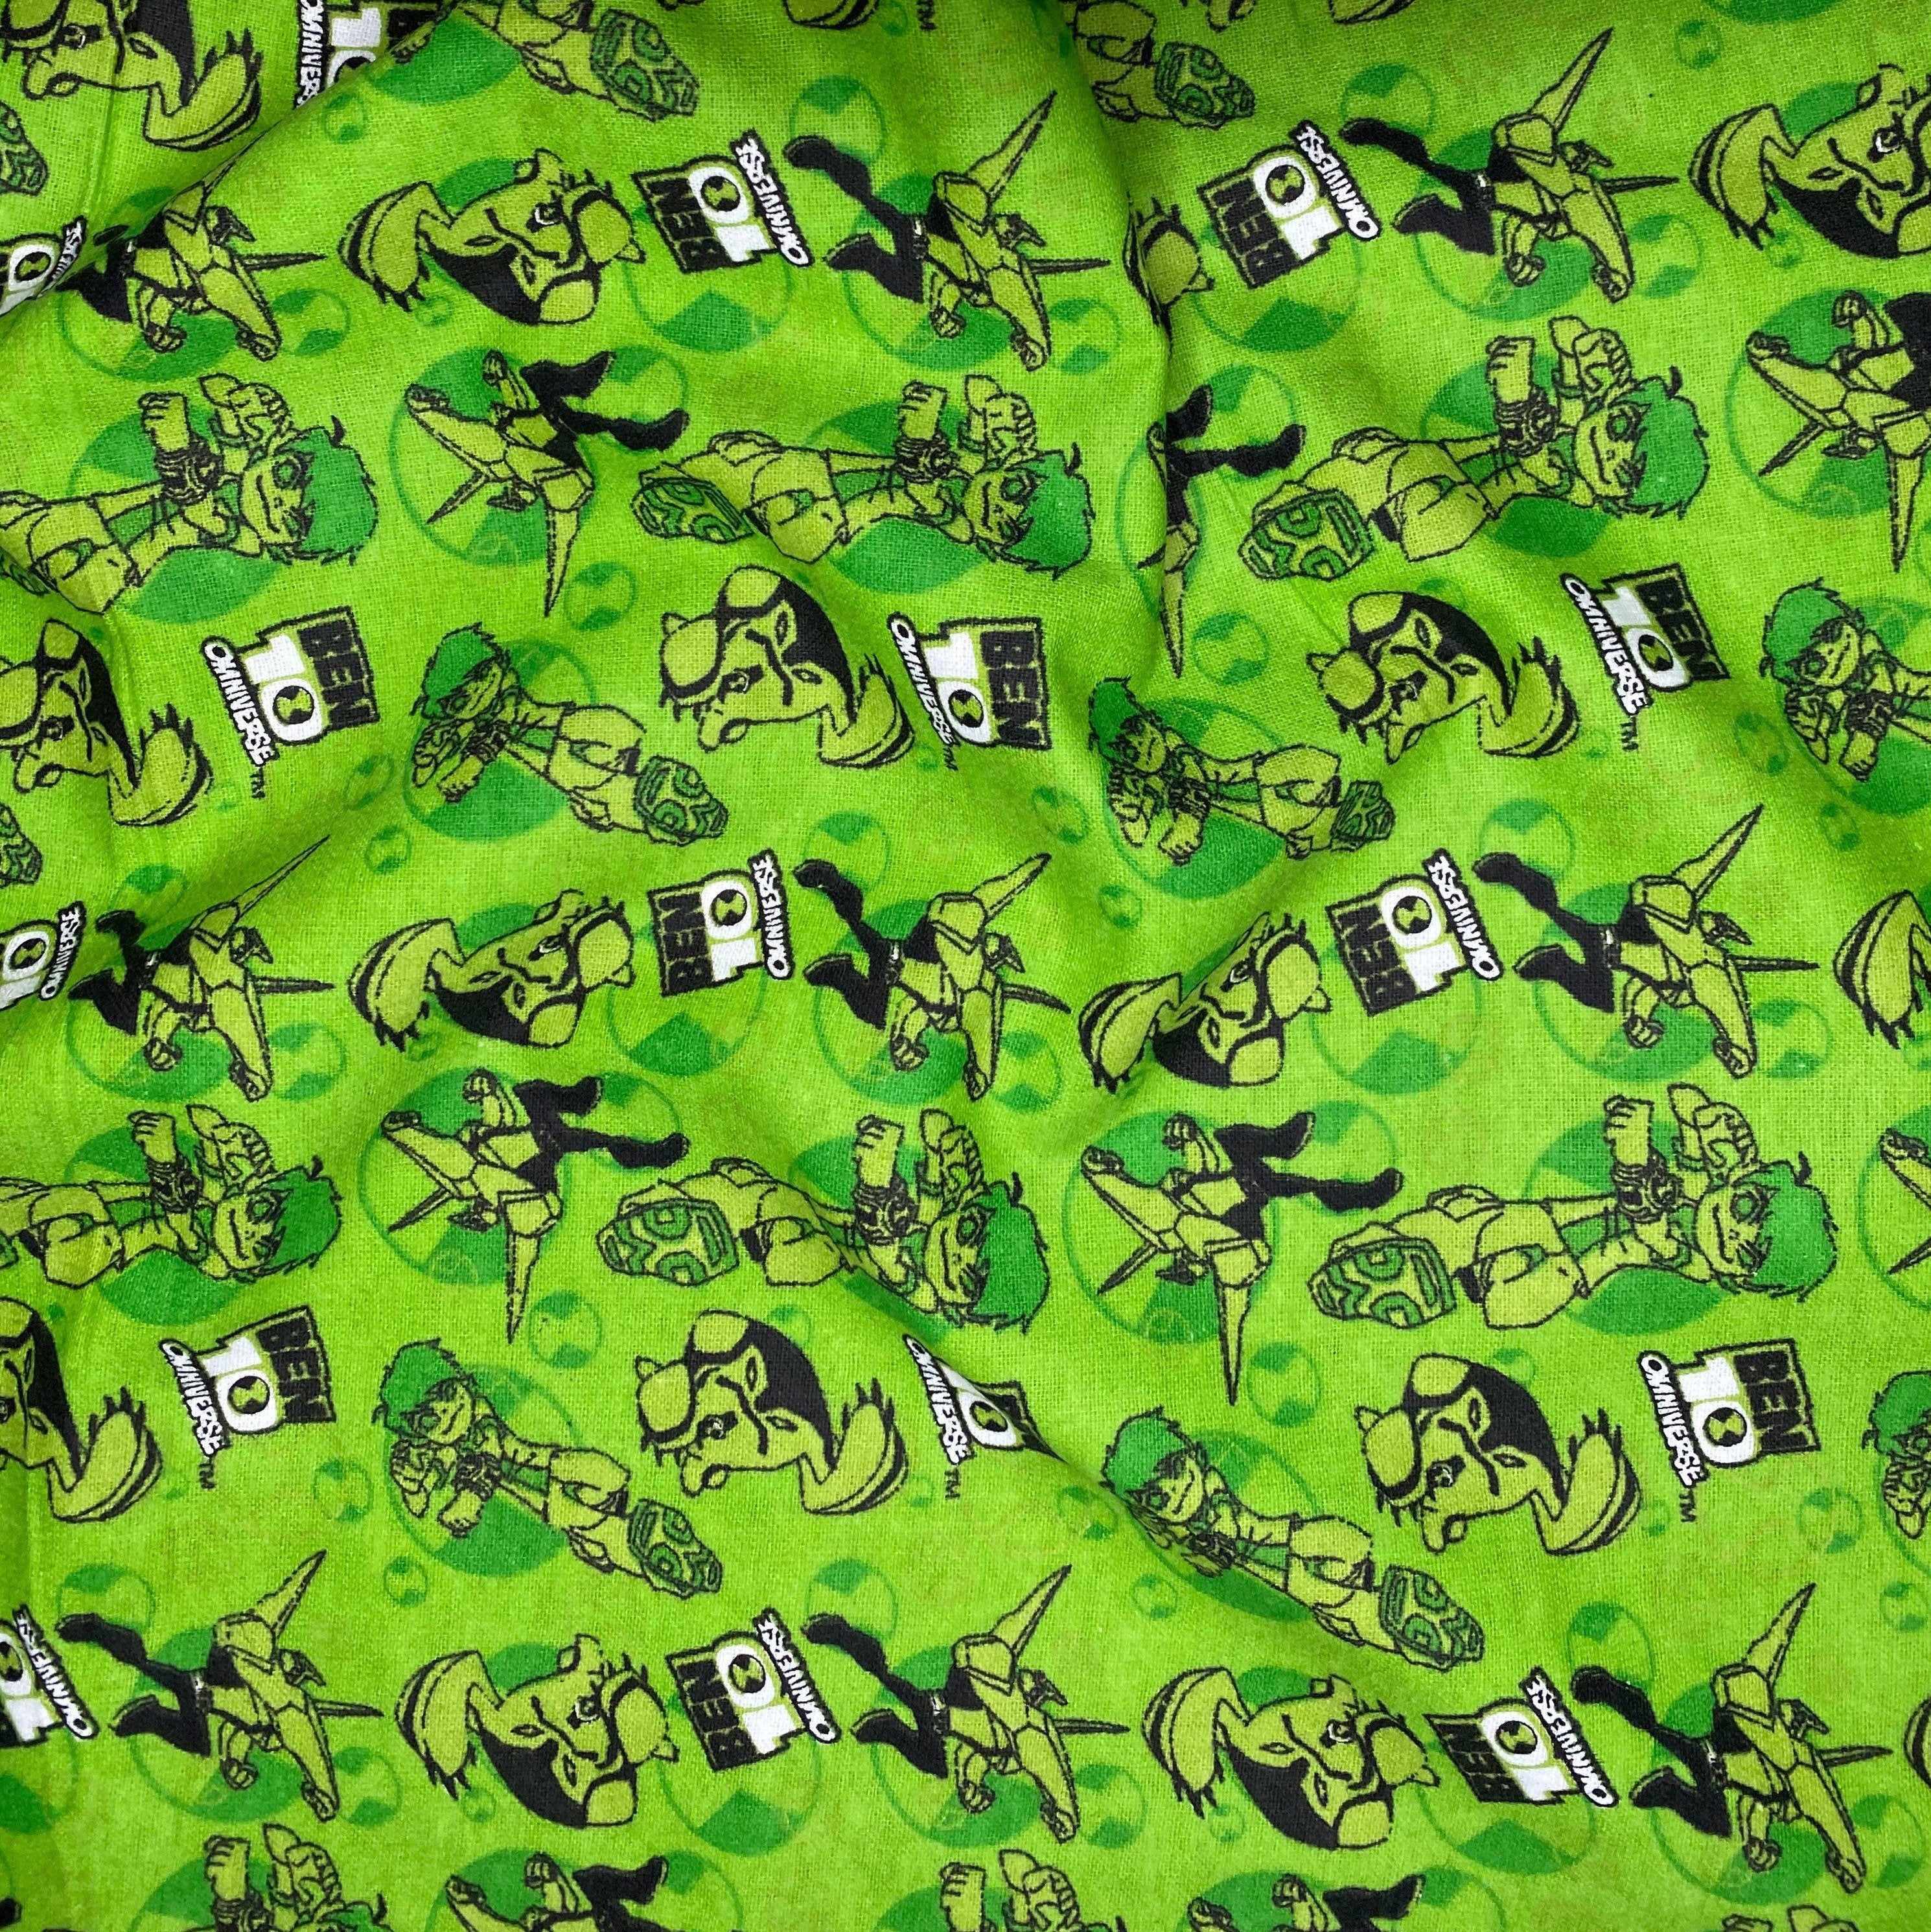 Printed Cotton Flannel - Ben 10 Omniverse - Green